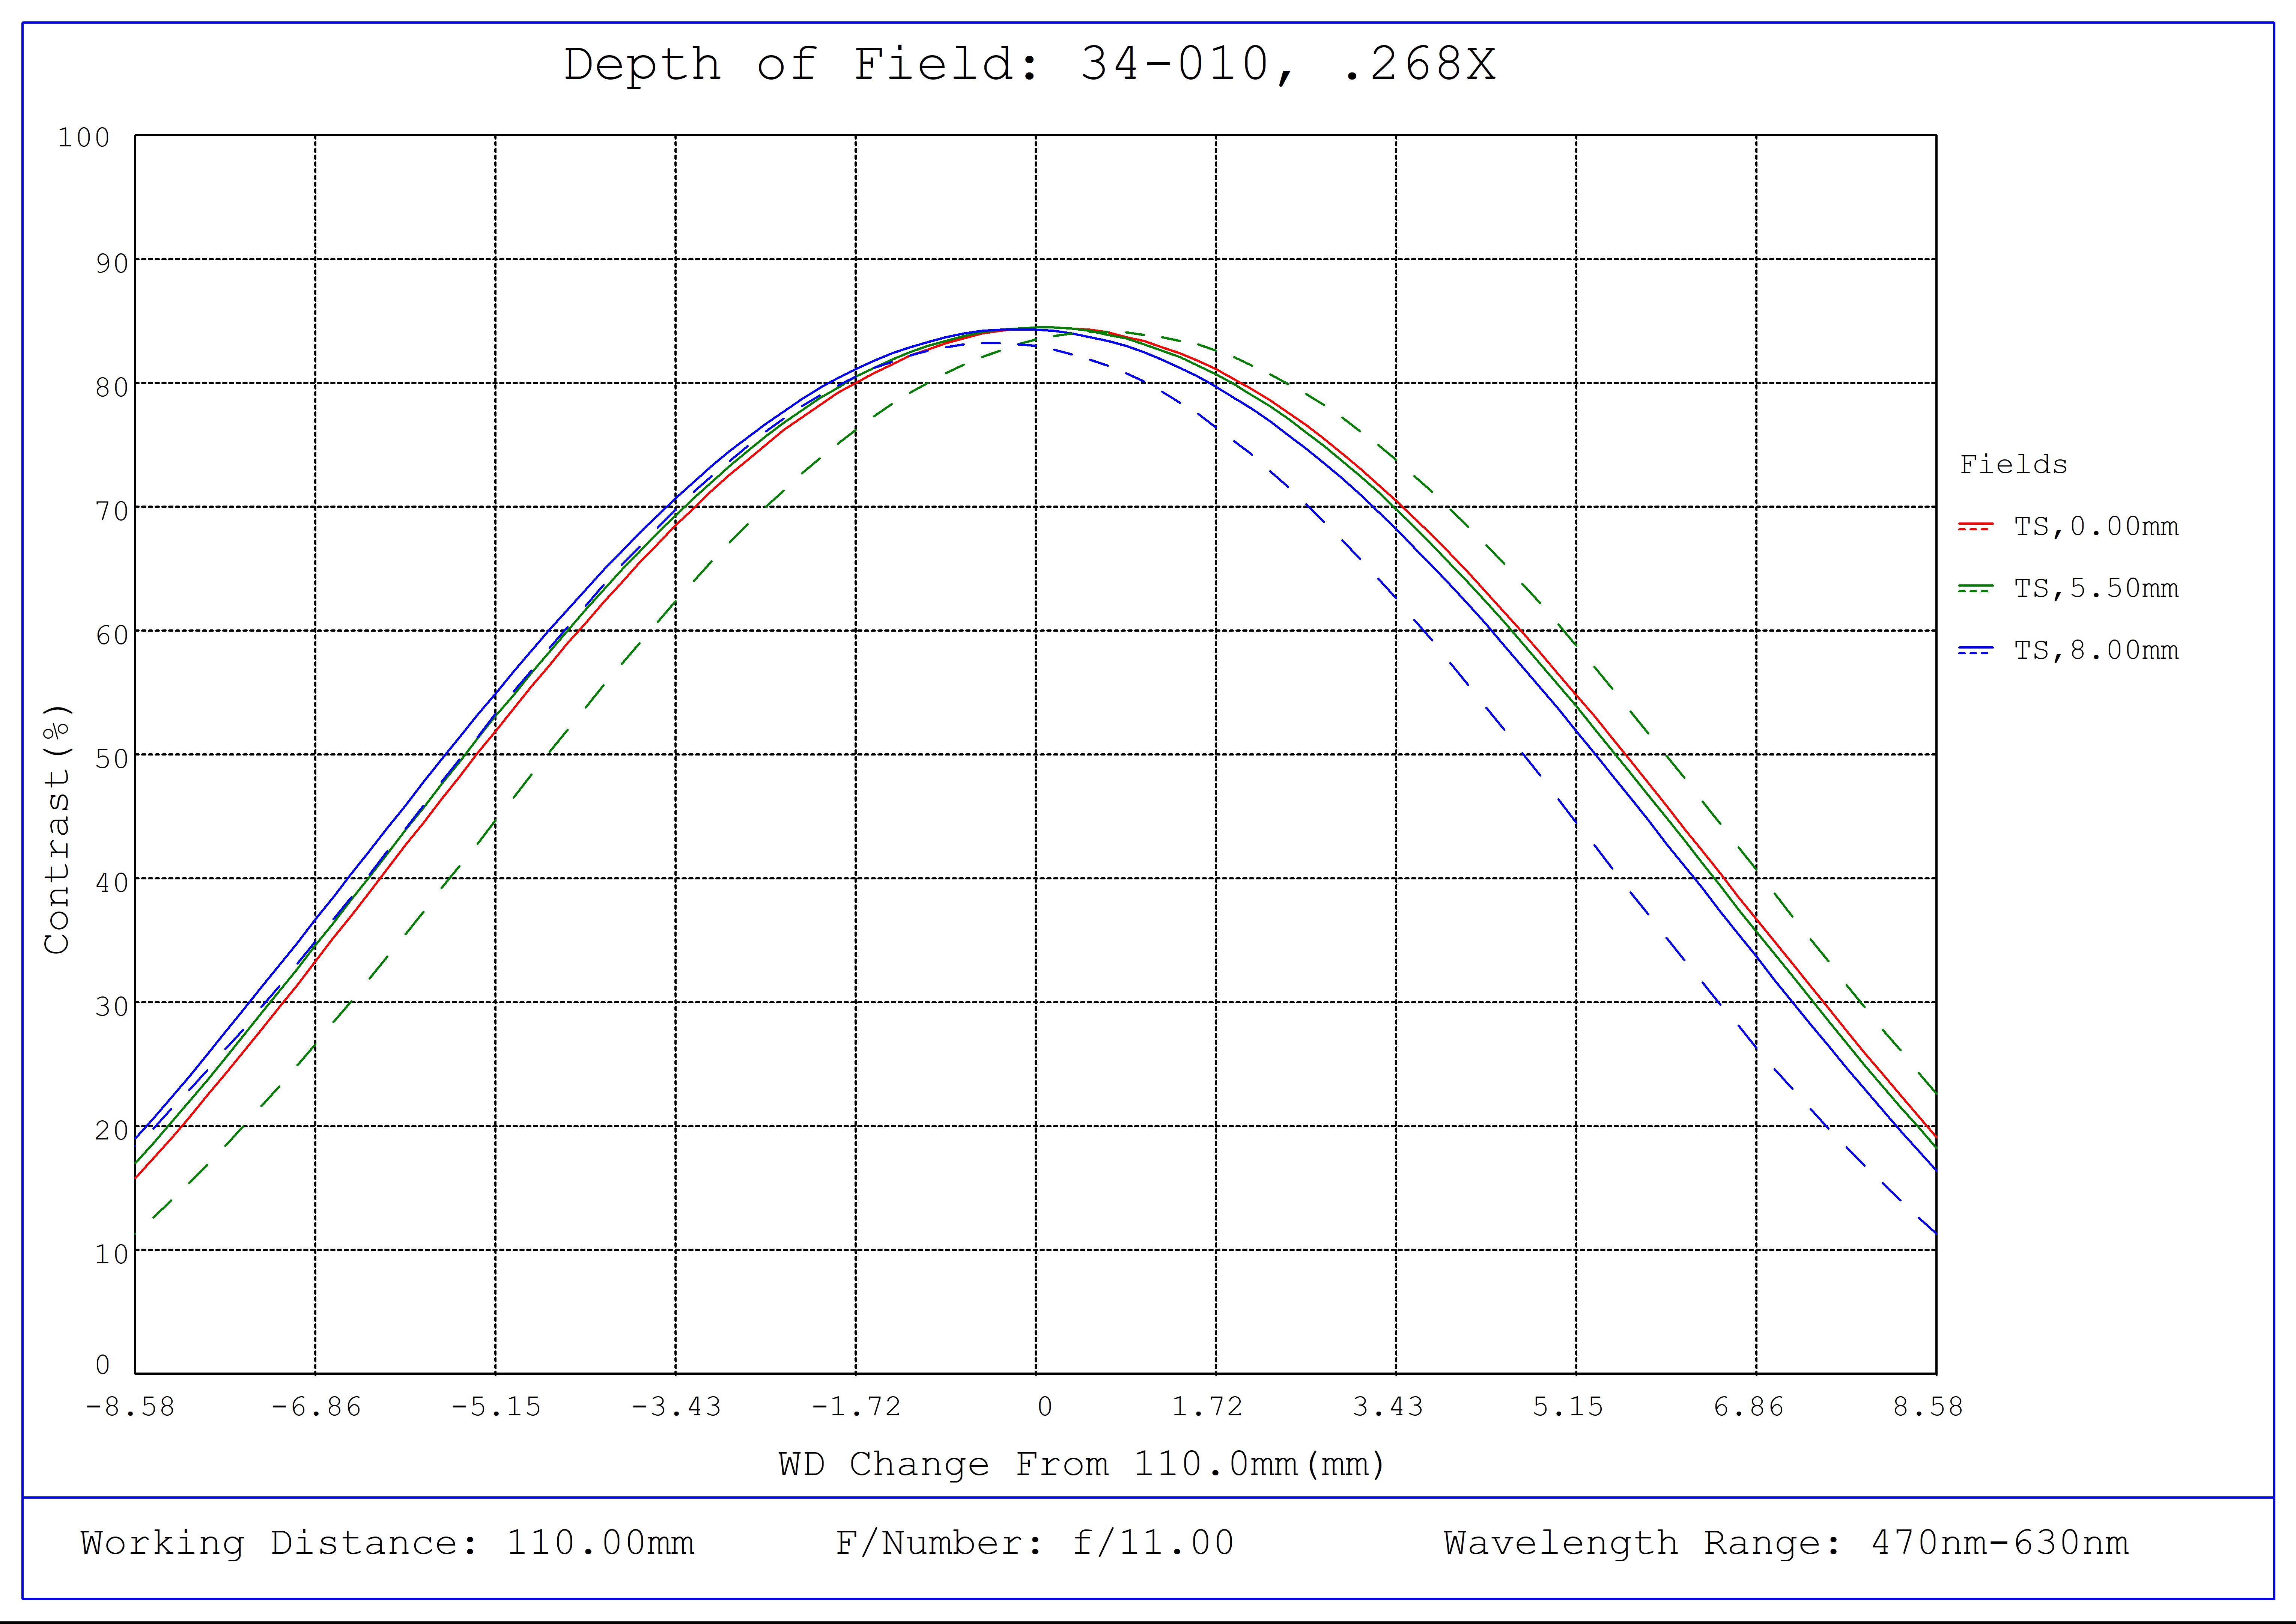 #34-010, 0.268X, 1" C-Mount TitanTL® Telecentric Lens, Depth of Field Plot, 110mm Working Distance, f11